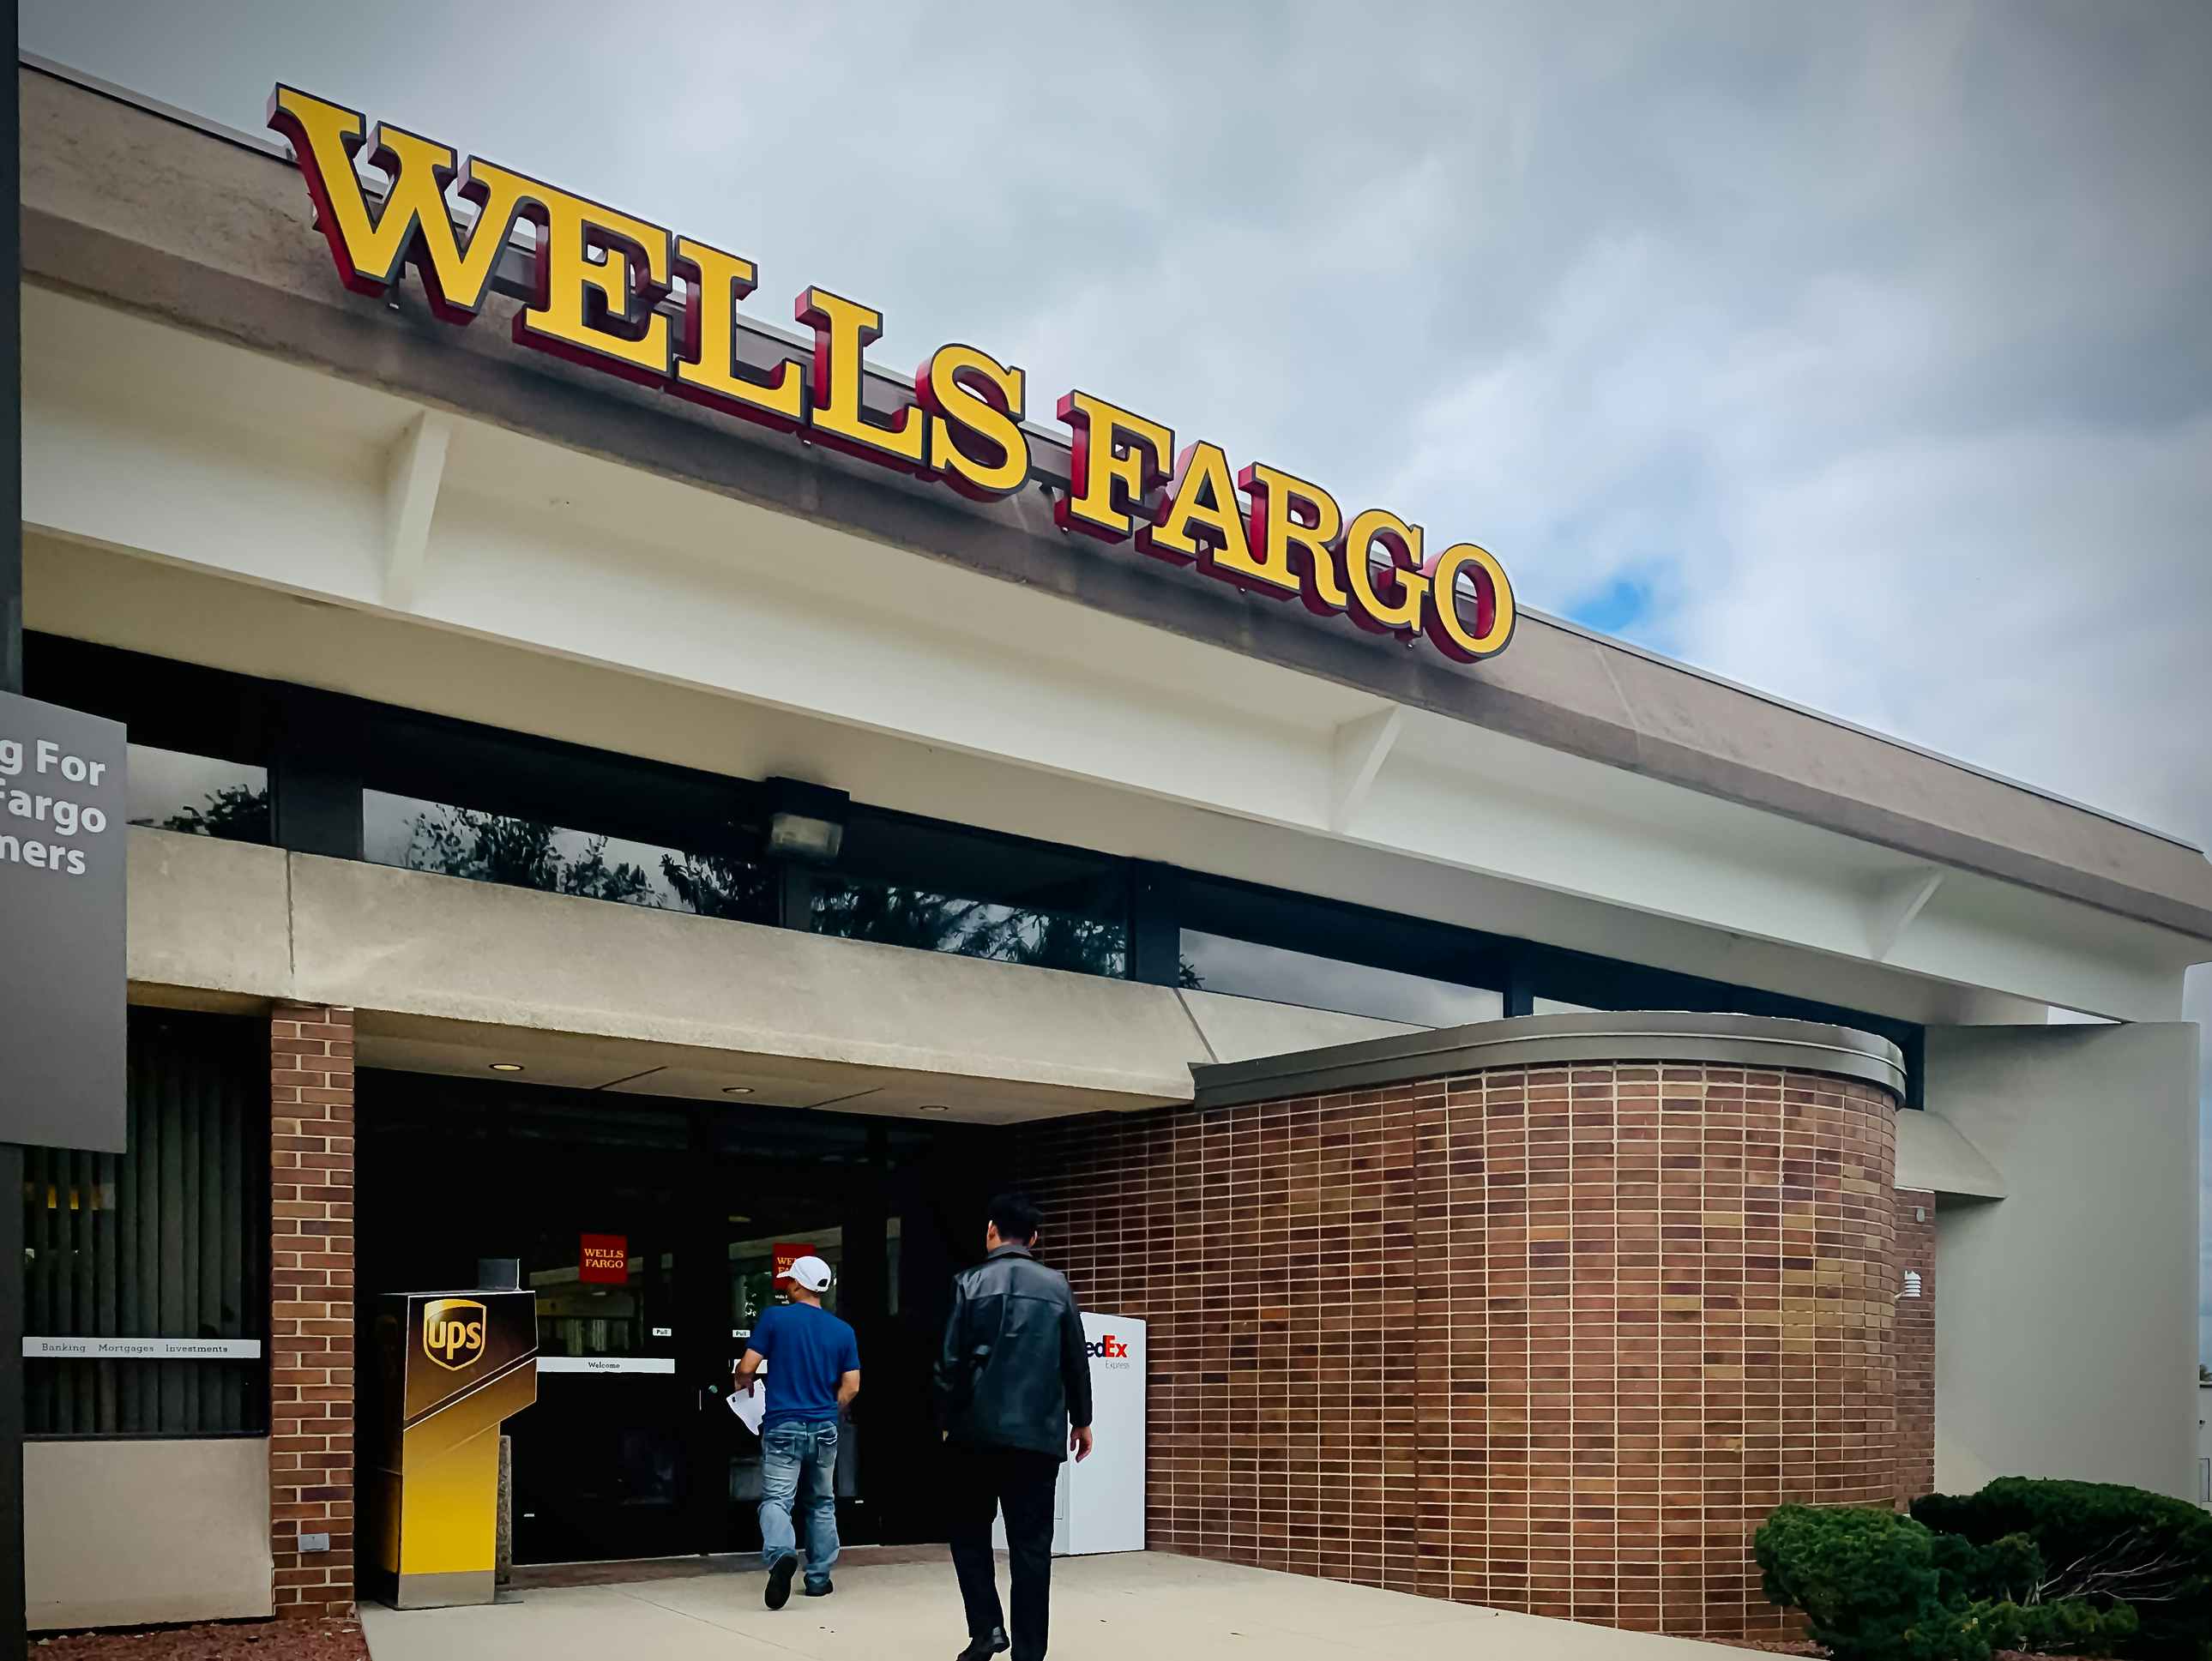 Wells Fargo customers will be getting $2 billion in settlement funds